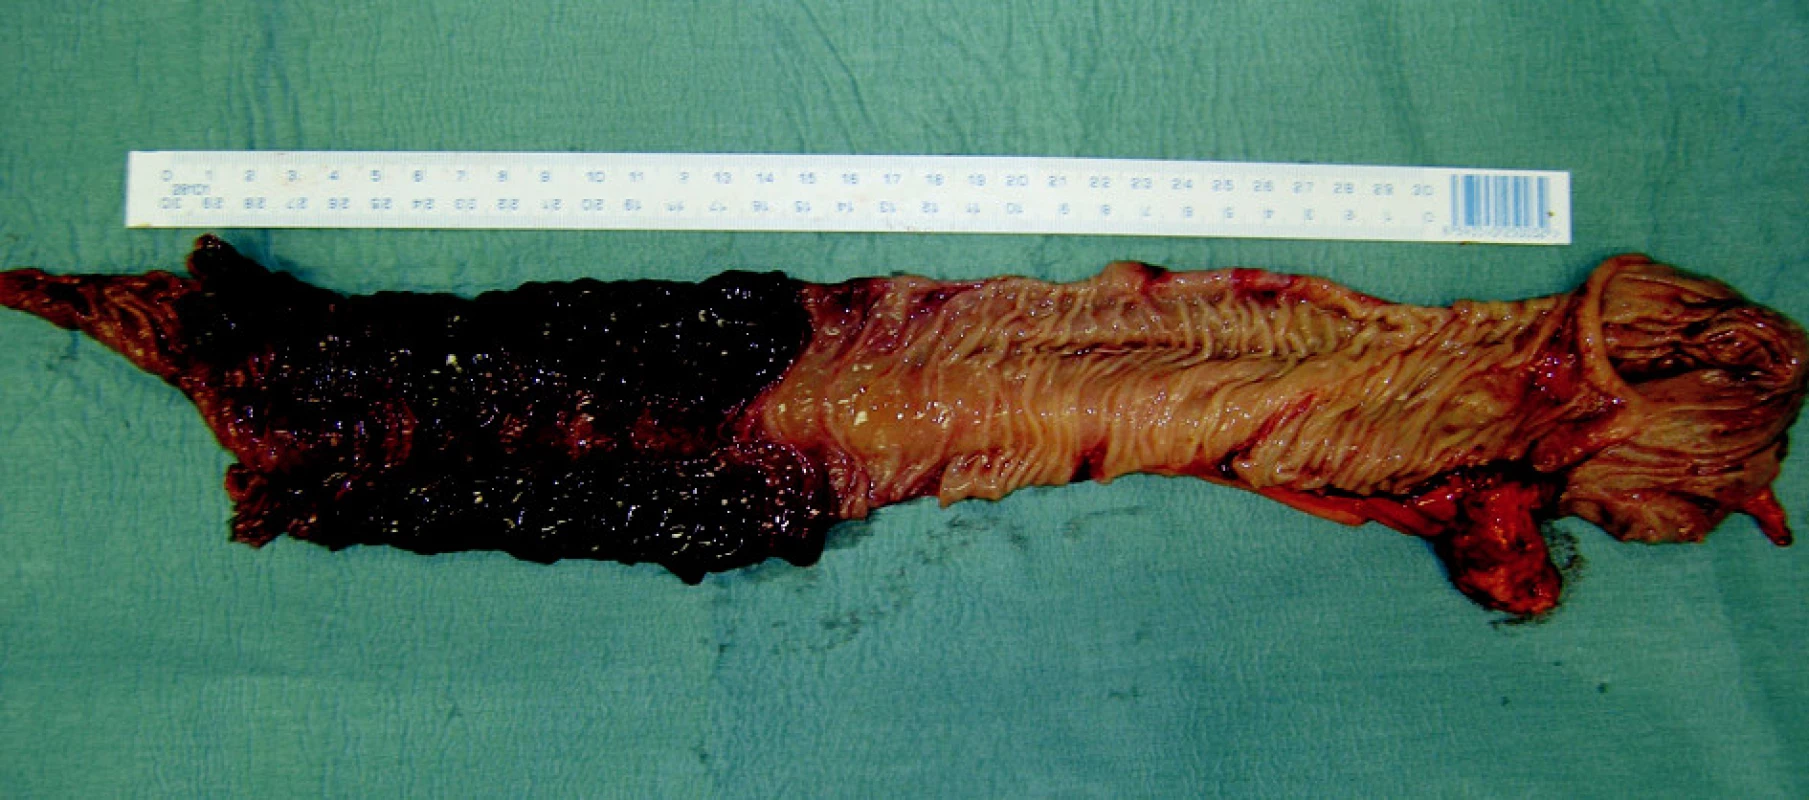 Stopkatý tumor distálního ilea – maligní melanom
Fig. 4. The stem tumor of the distal ileum – melanoma malignum